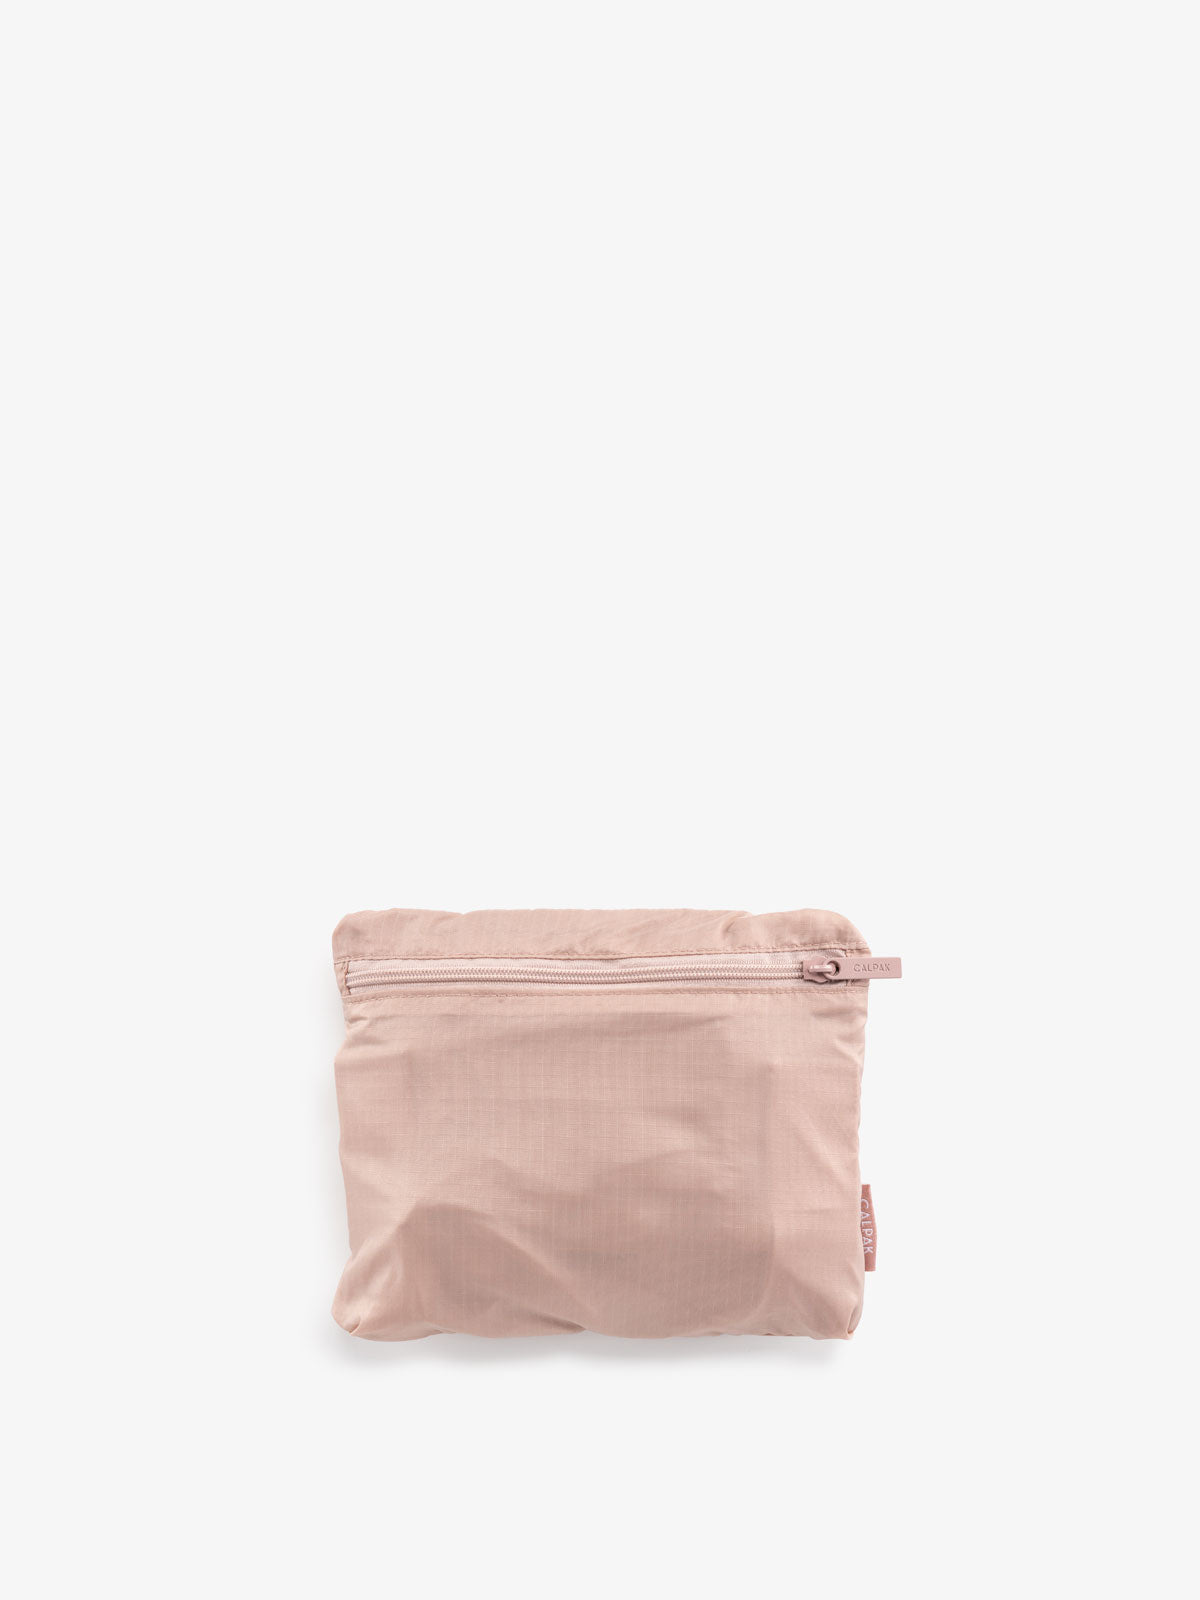 CALPAK lightweight pink duffle bag for women foldable into pouch